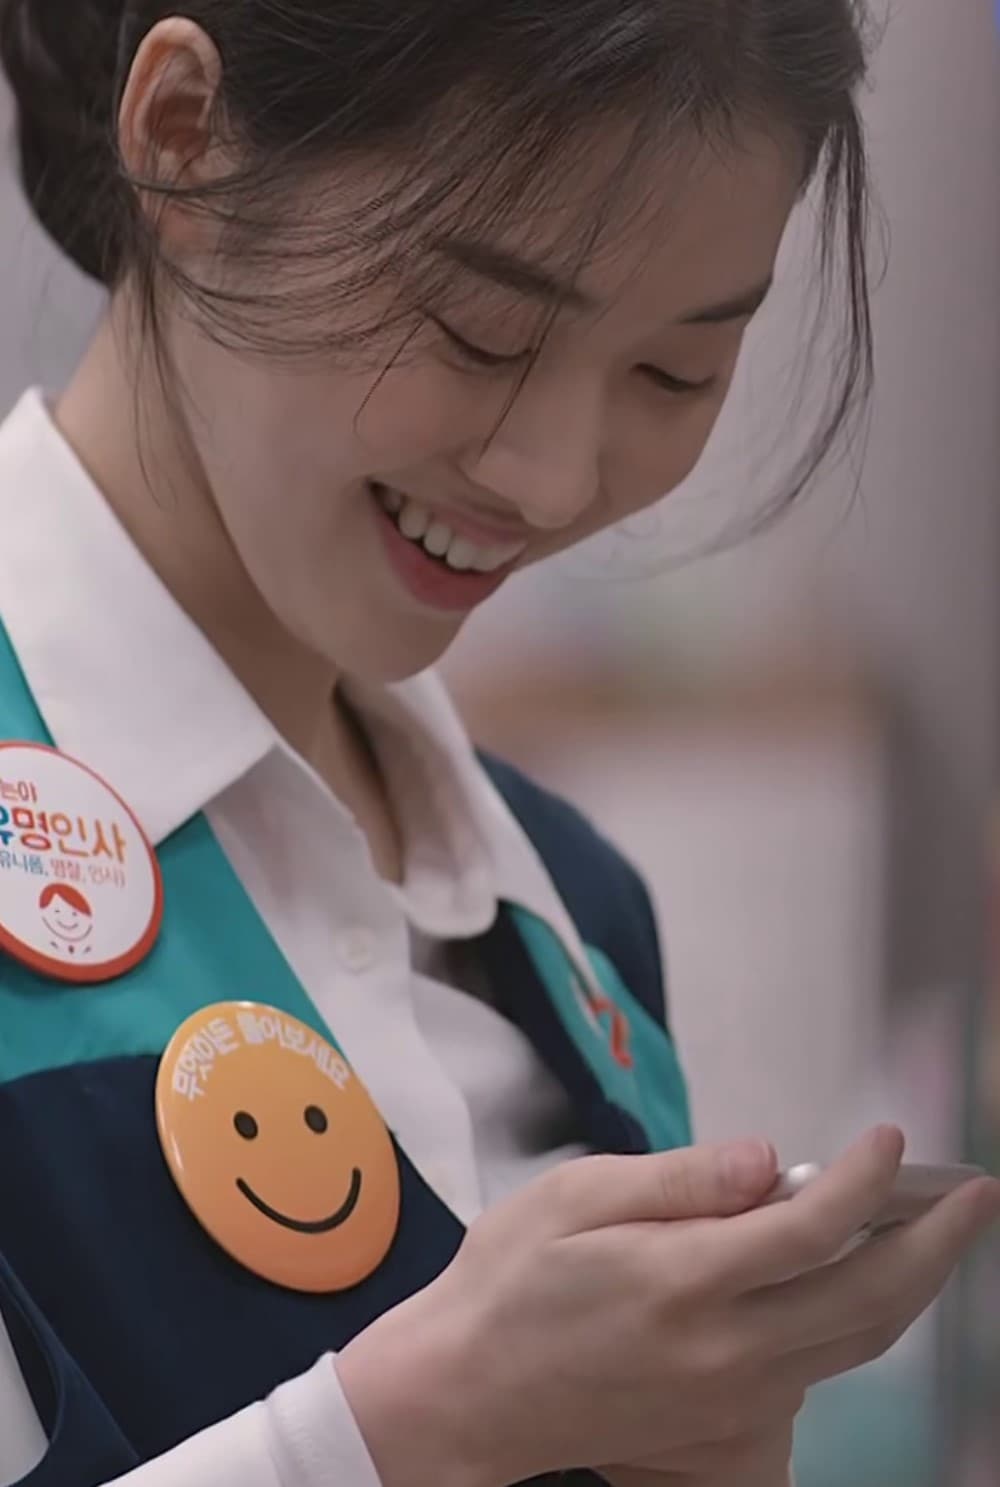 K-Bank Launching Ad "Common Sense Wins"